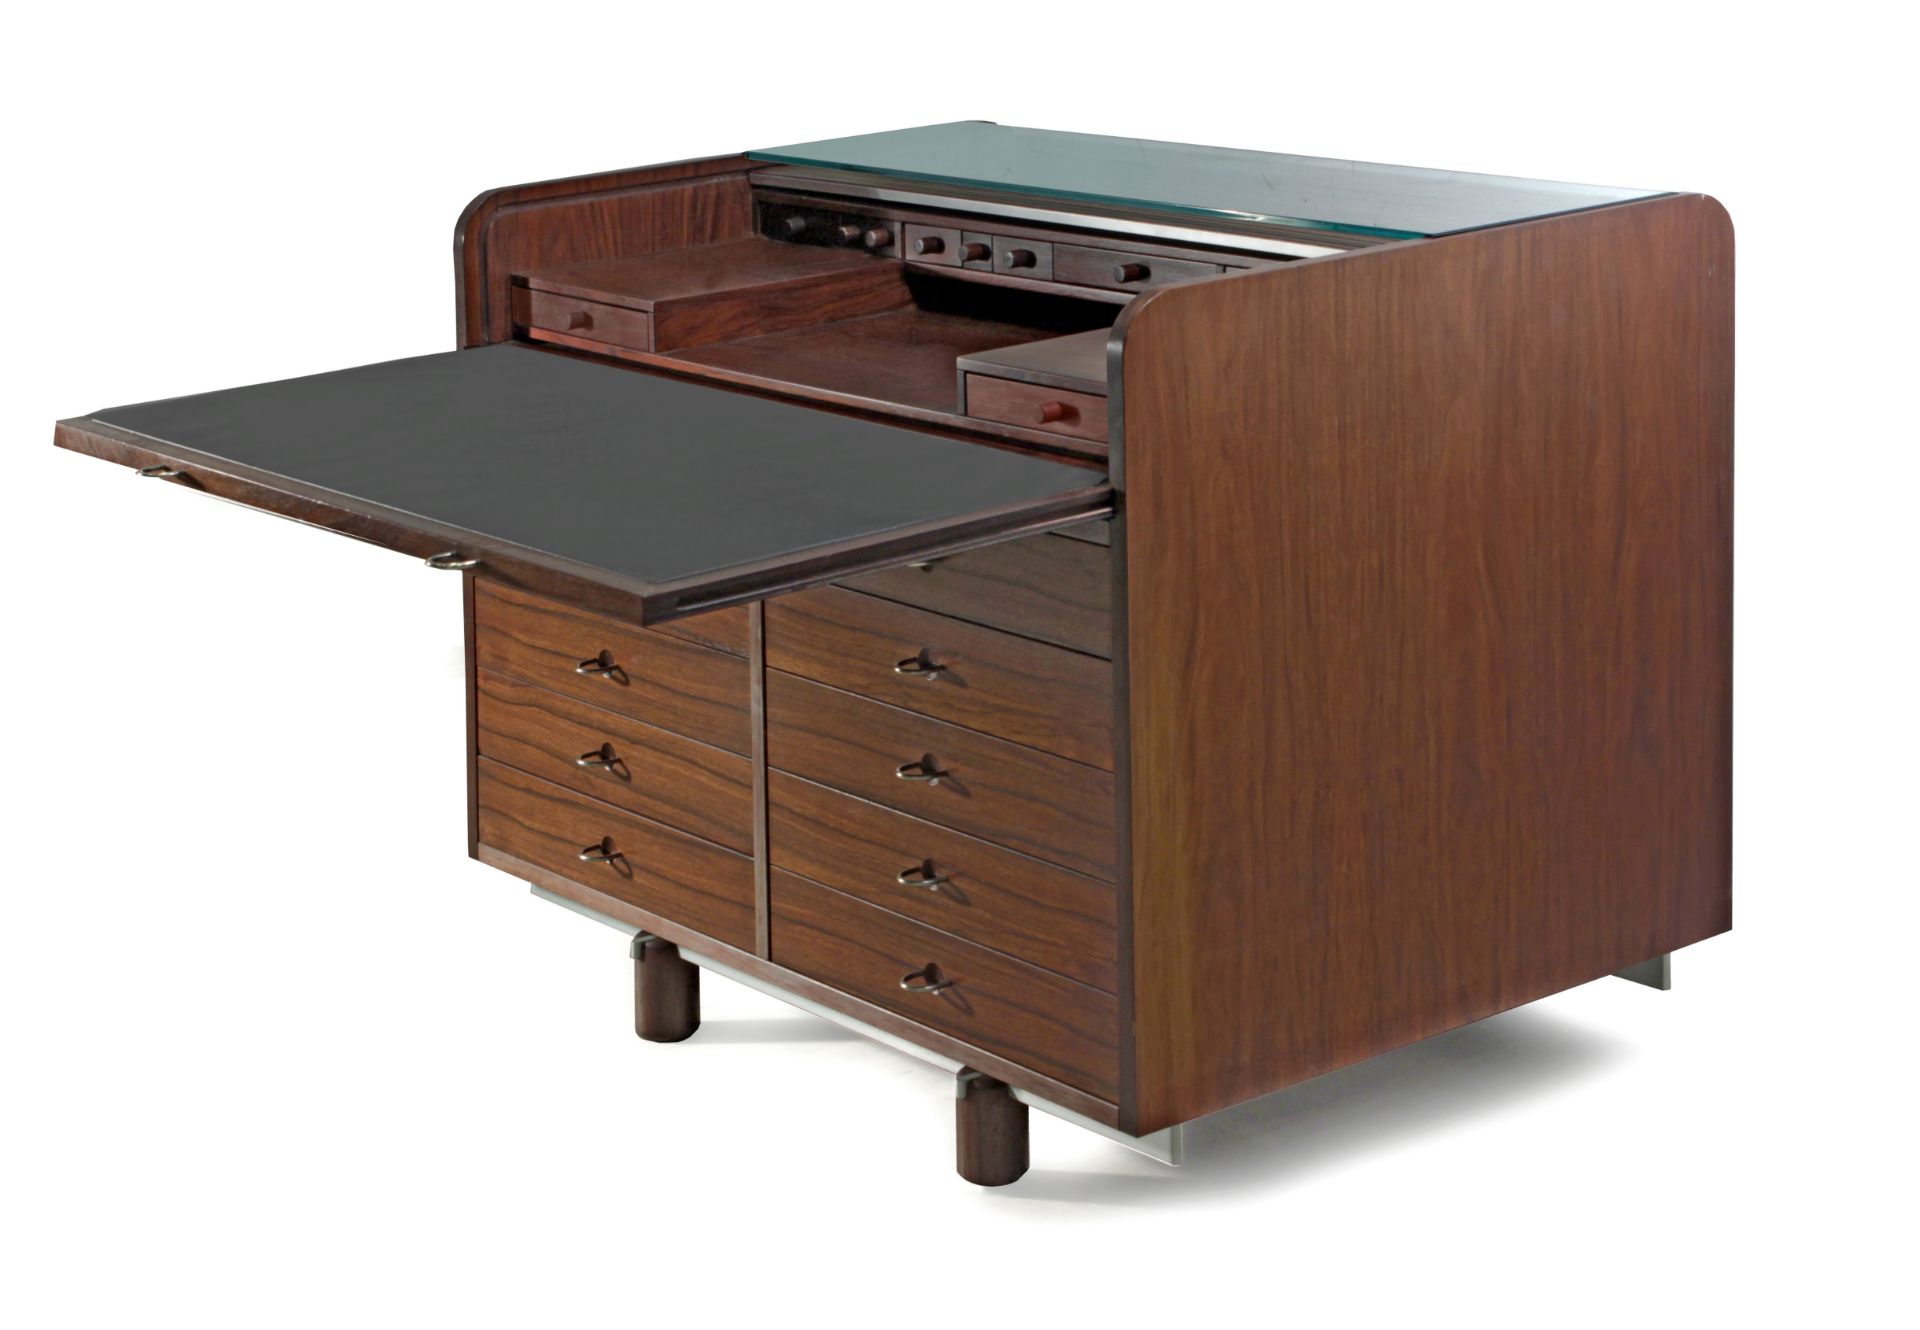 Gianfranco Frattini for Bernini circa 1960-1969. Cabinet with desk model 804 - Image 4 of 9